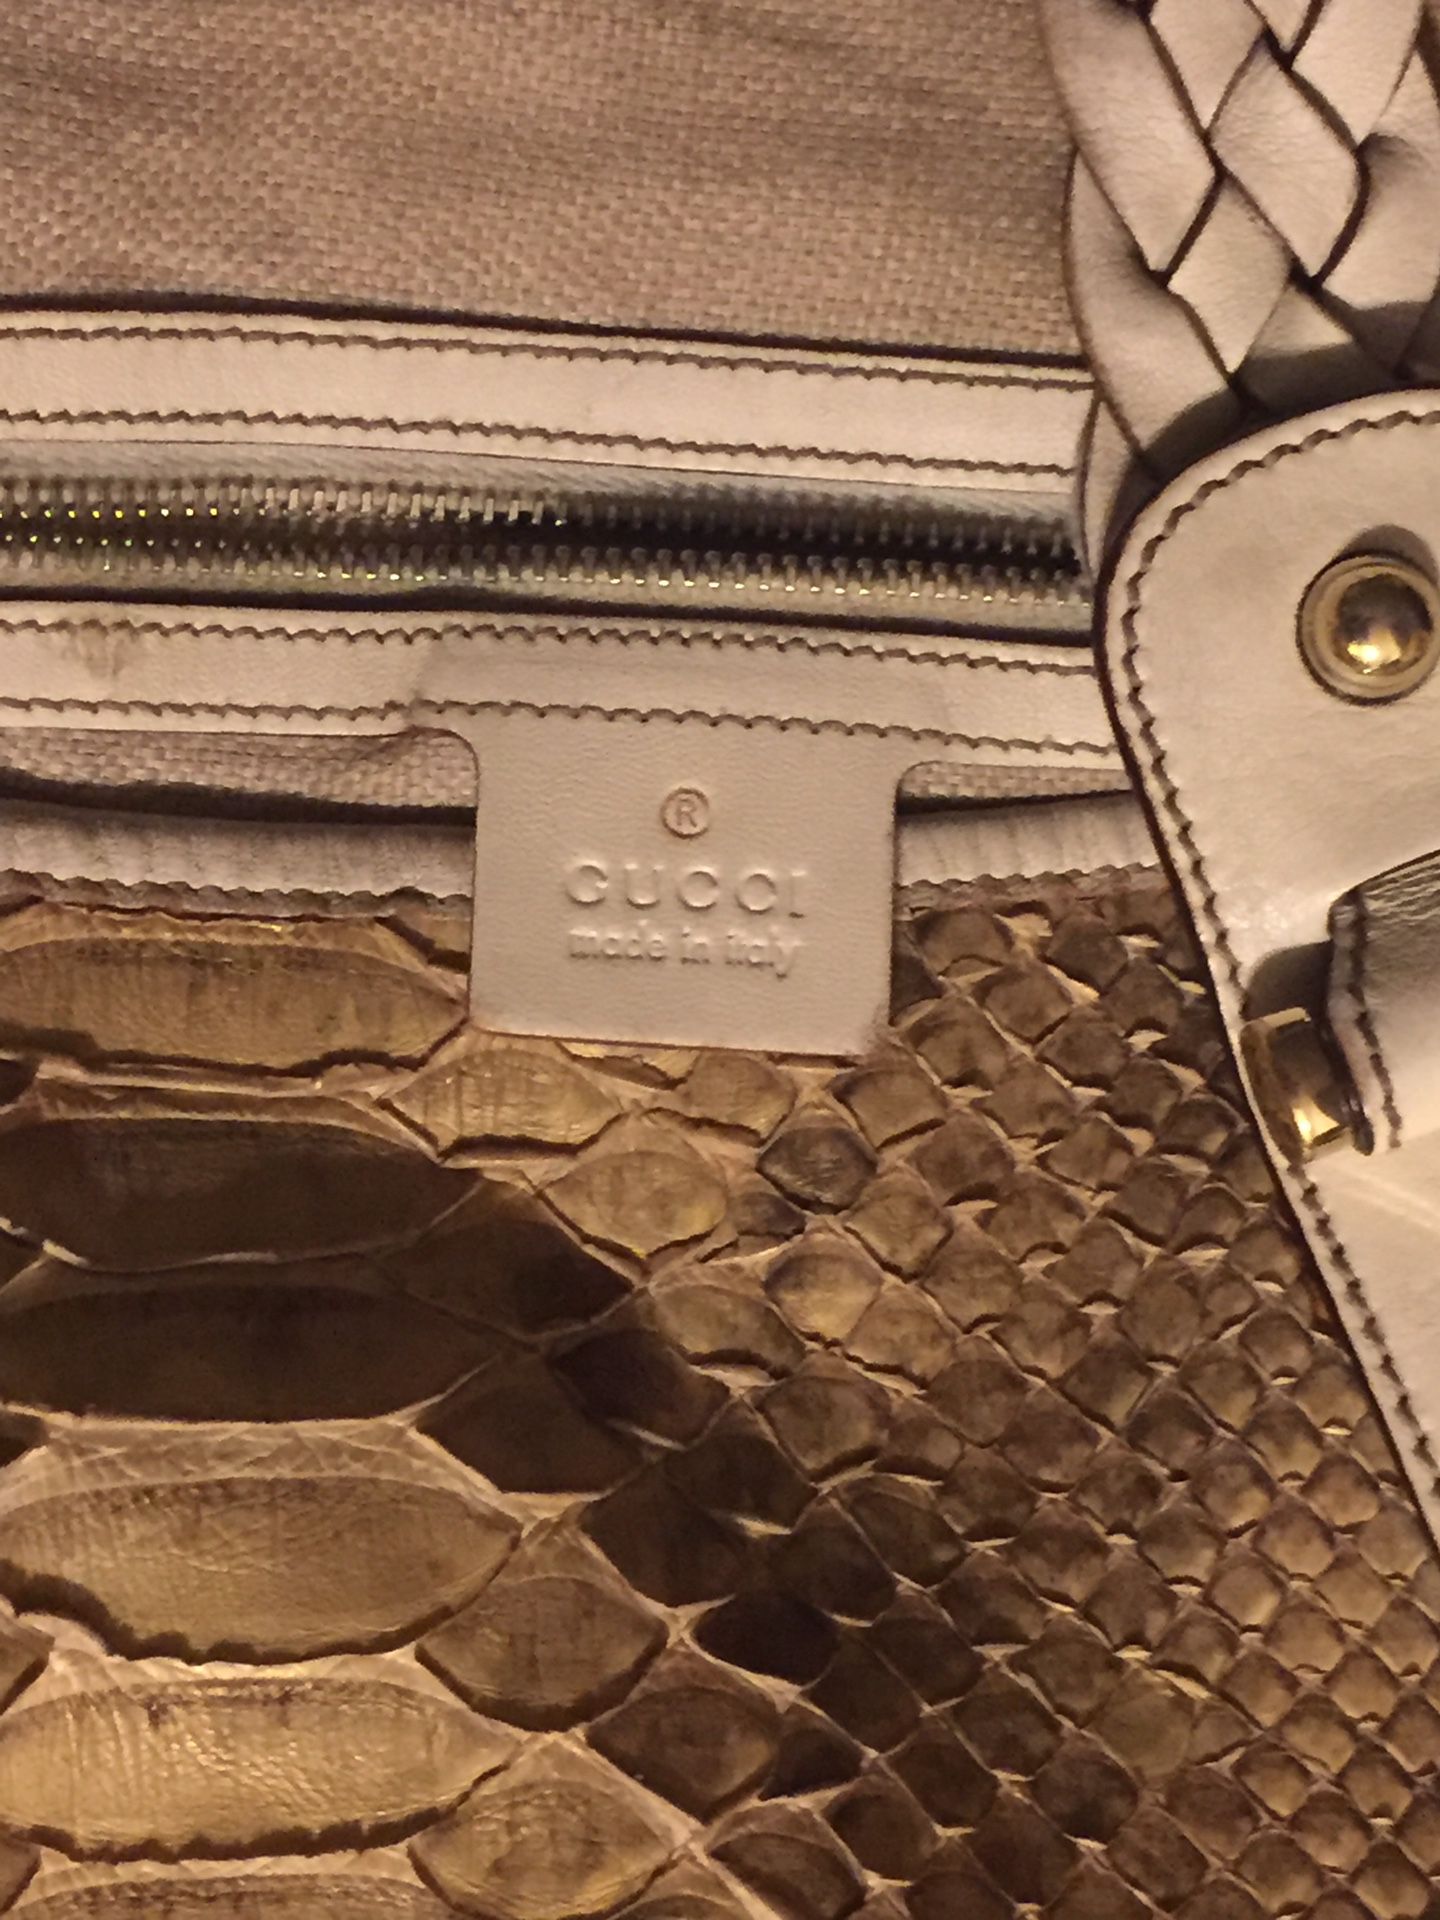 Snakeskin Gucci Purse & Heels $300